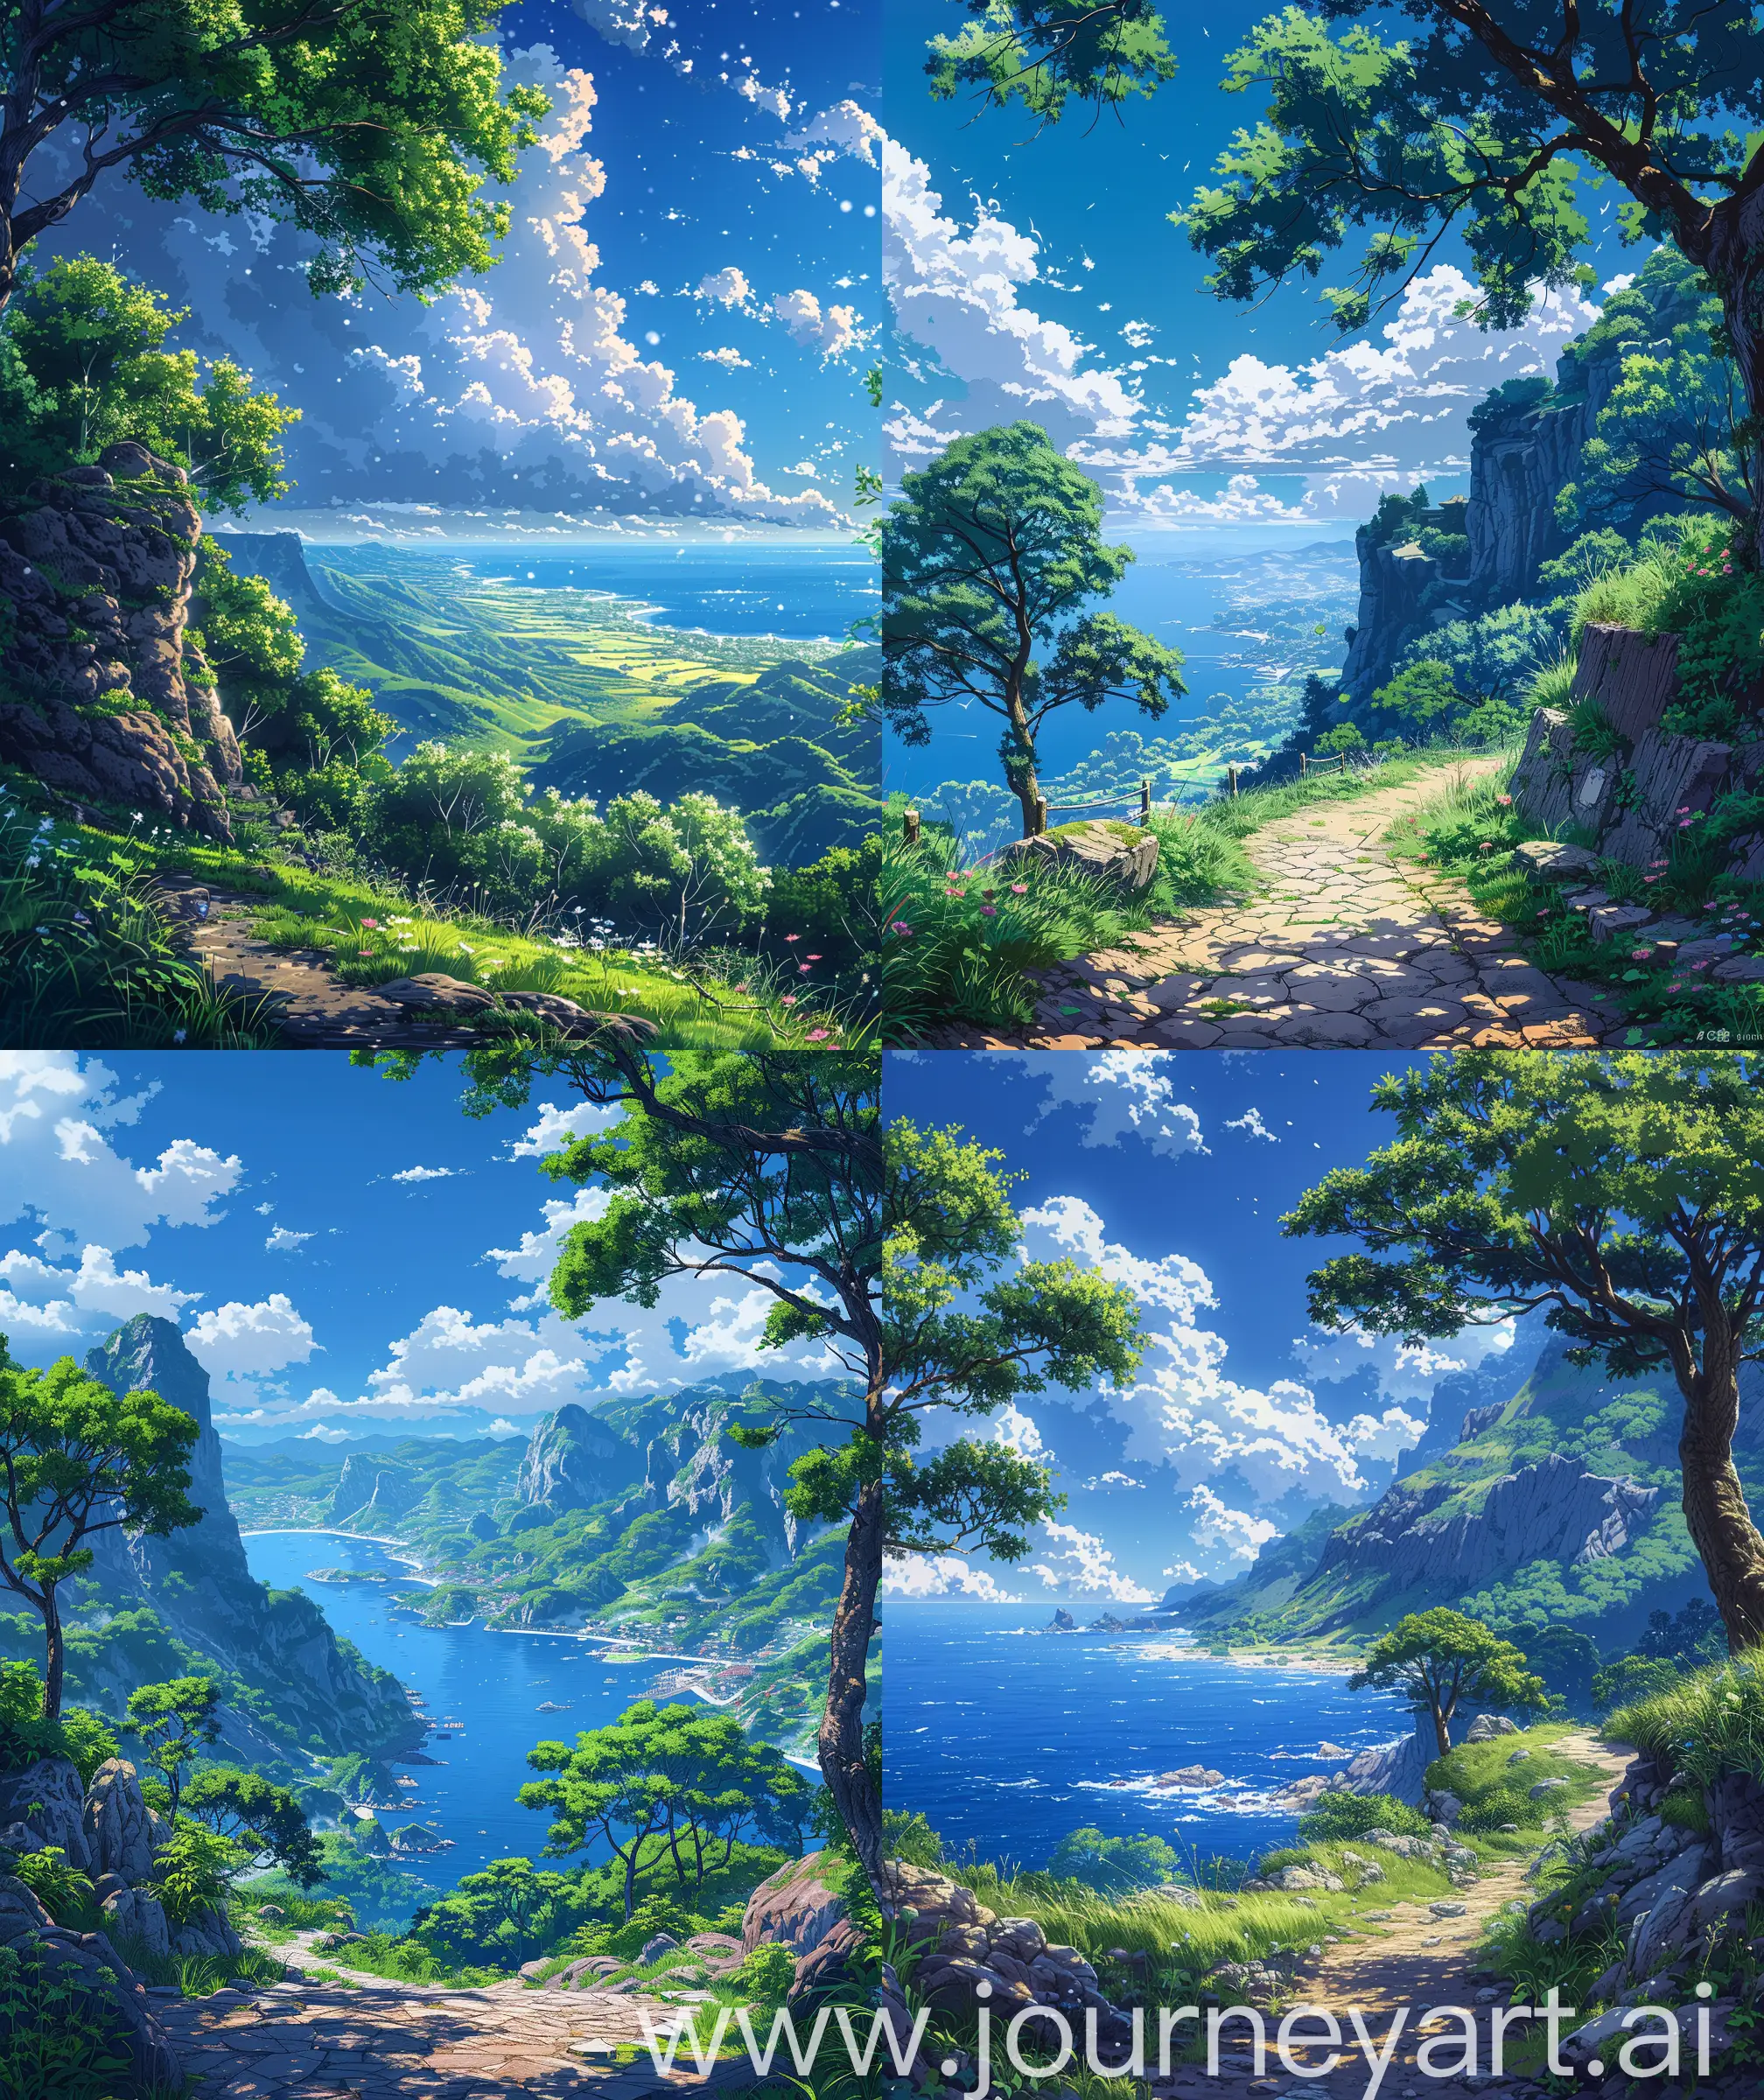 Tranquil-Anime-Nature-Landscapes-Serene-Scenes-in-Makoto-Shinkai-Style